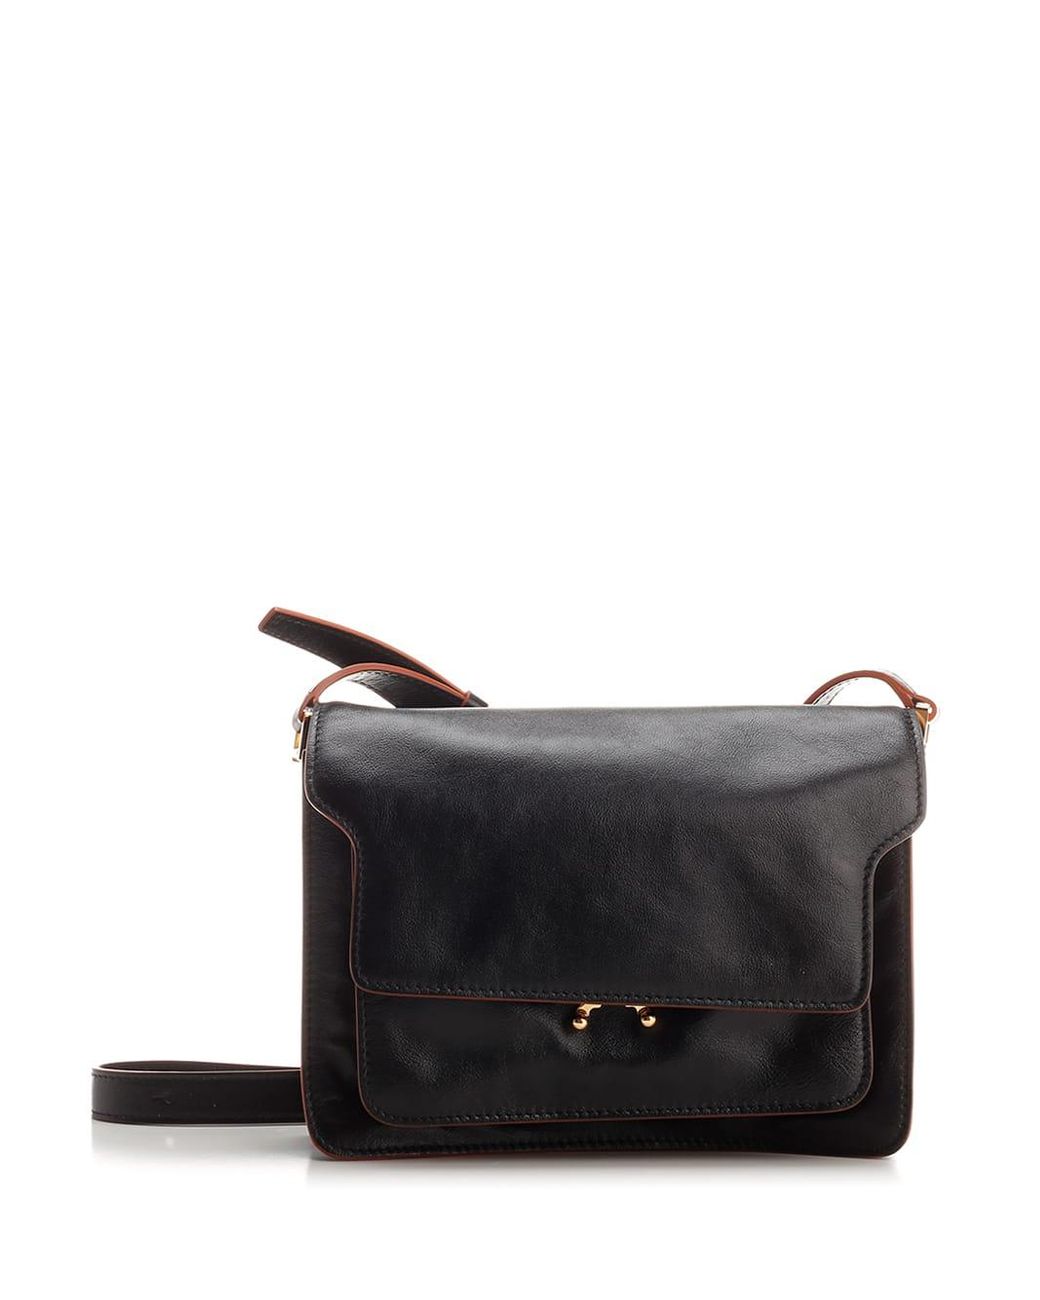 TRUNK SOFT medium bag in black leather